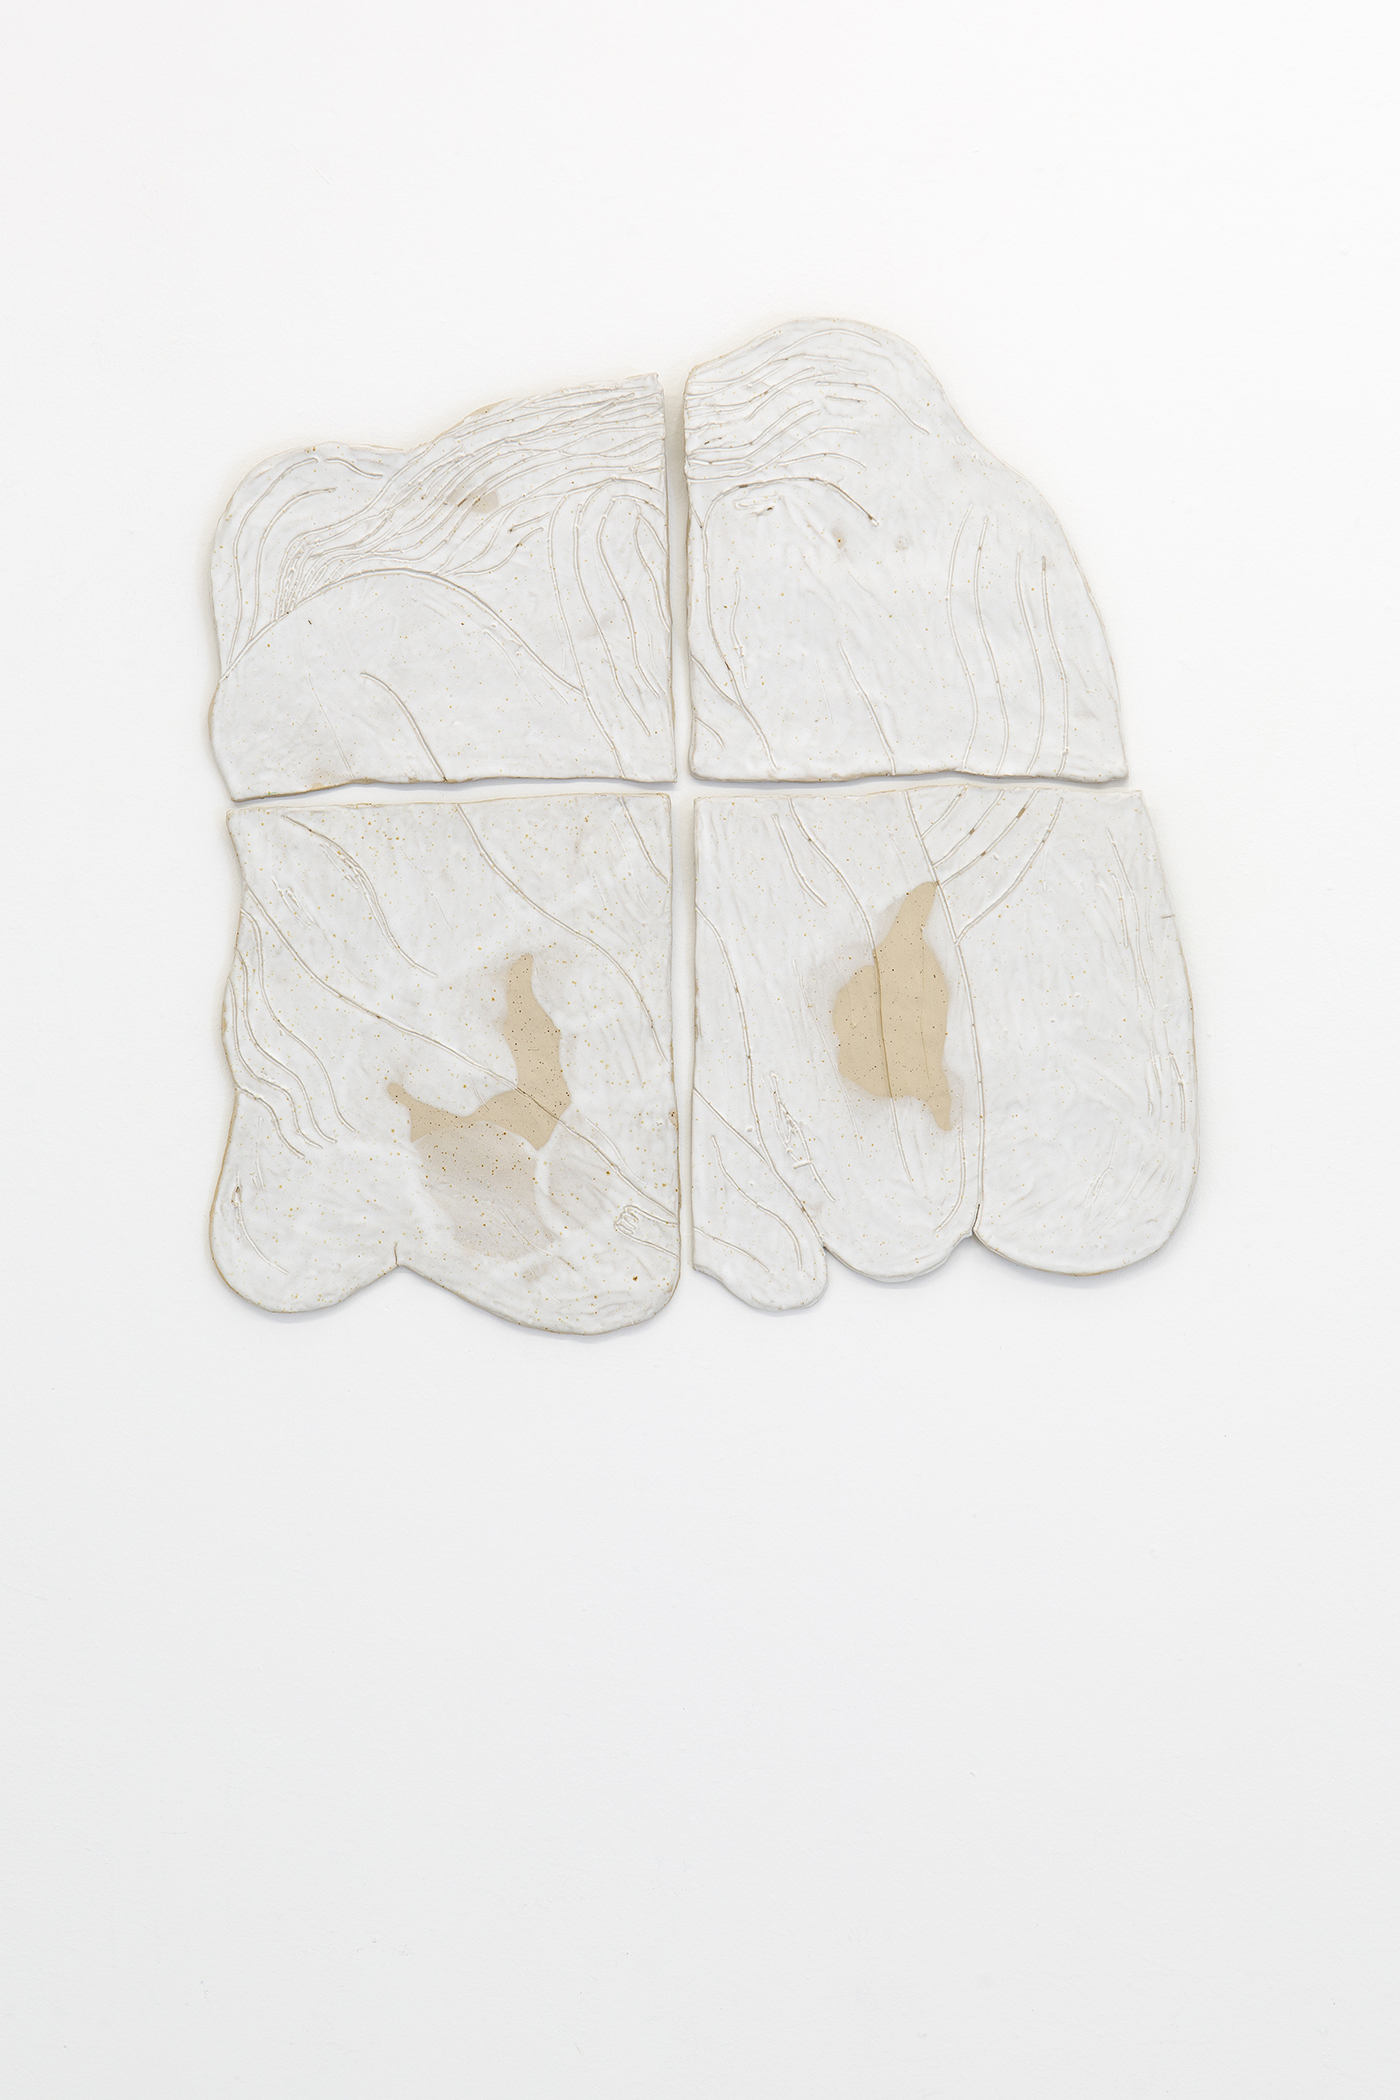  Alina Vergnano,  The Knots,  2019, stoneware, glazed, 60 x 60 cm 